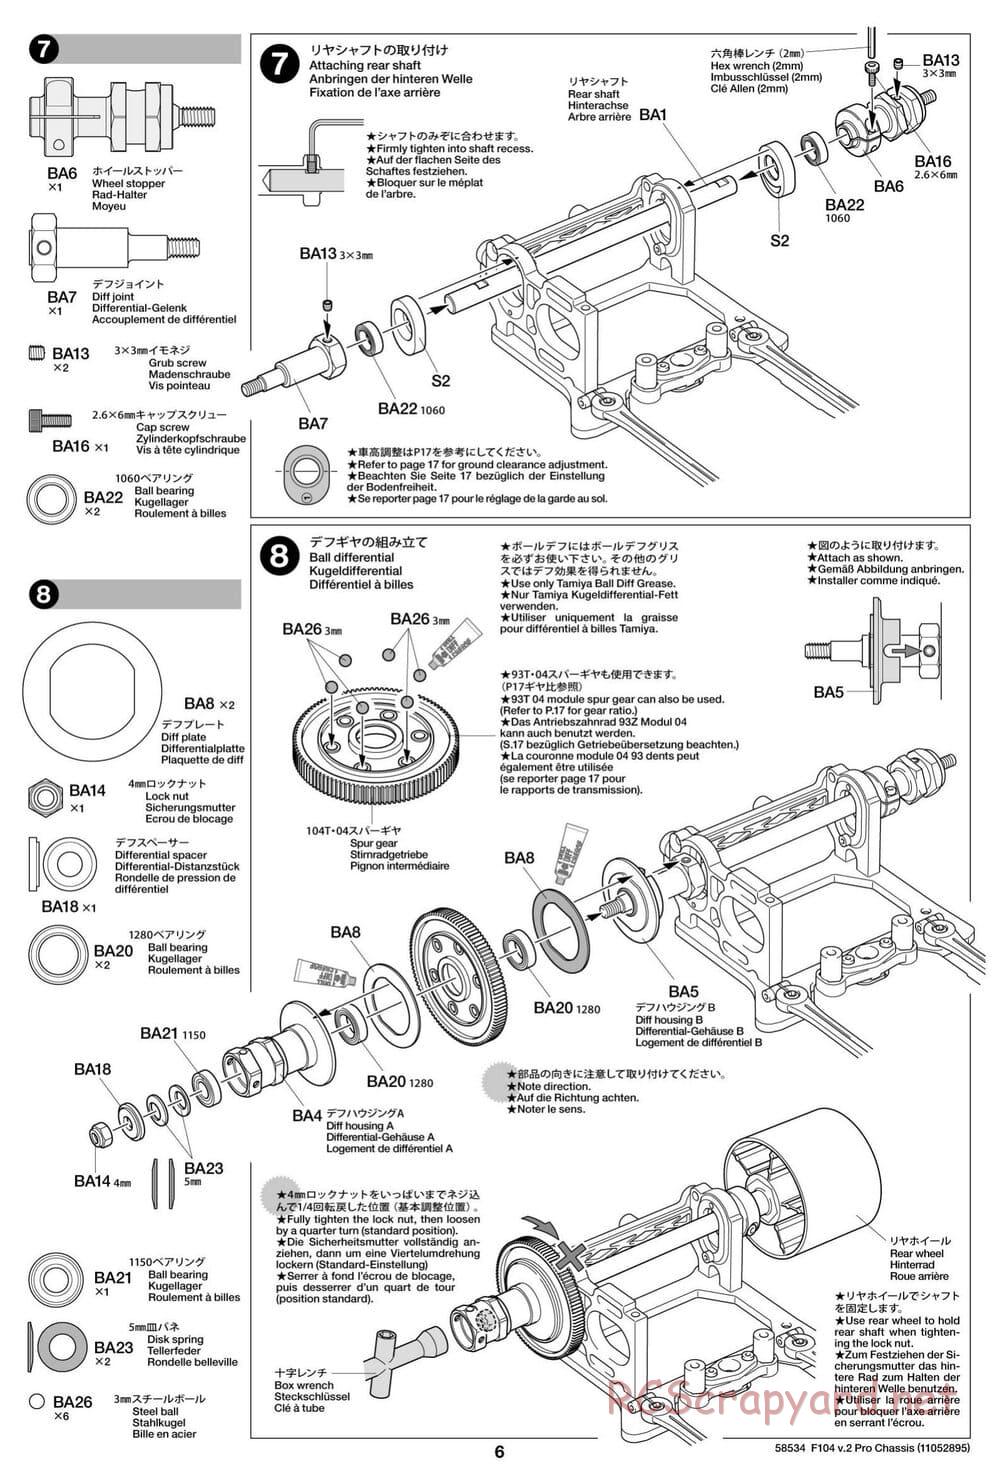 Tamiya - F104 Ver.II PRO Chassis - Manual - Page 6